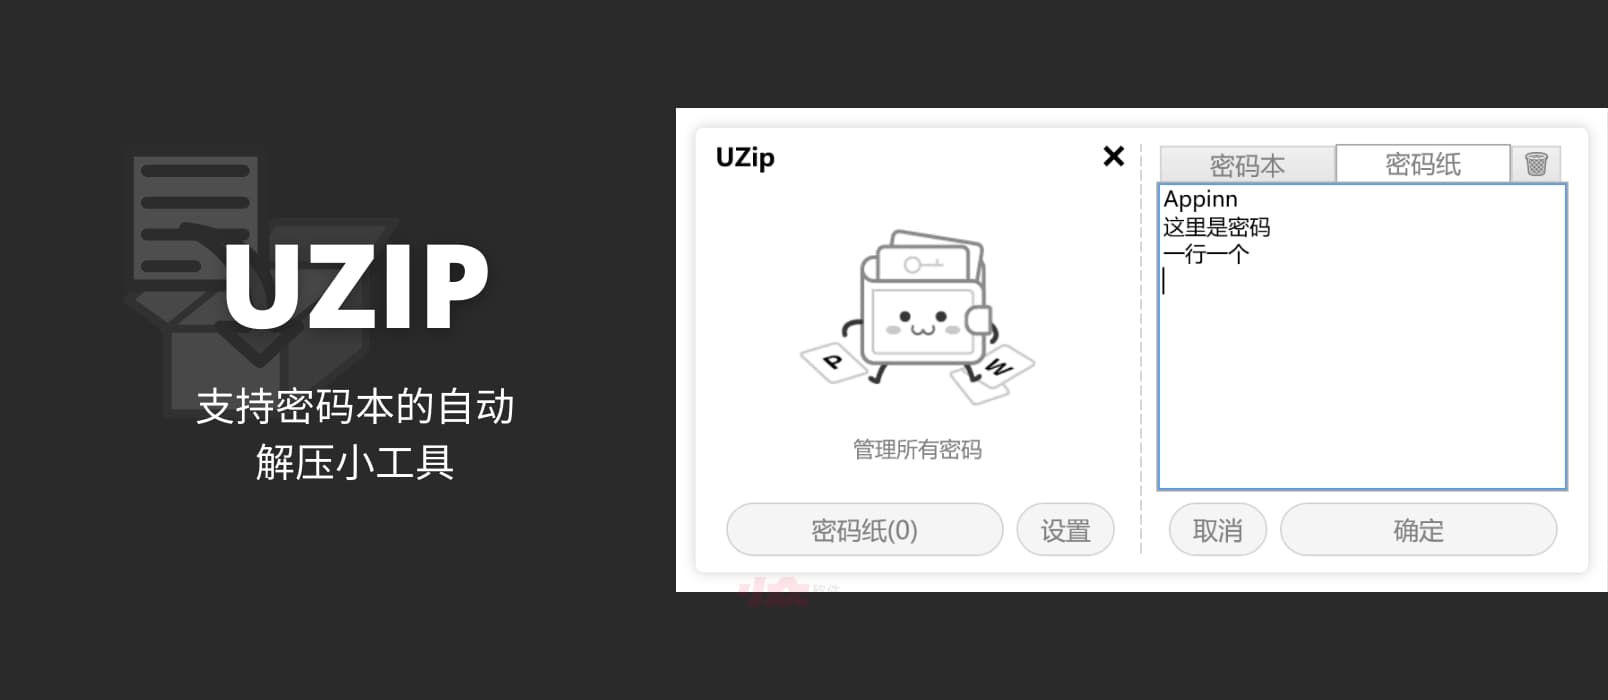 UZIP - 支持密码本，多密码自动解压缩加密文件[Windows] 1